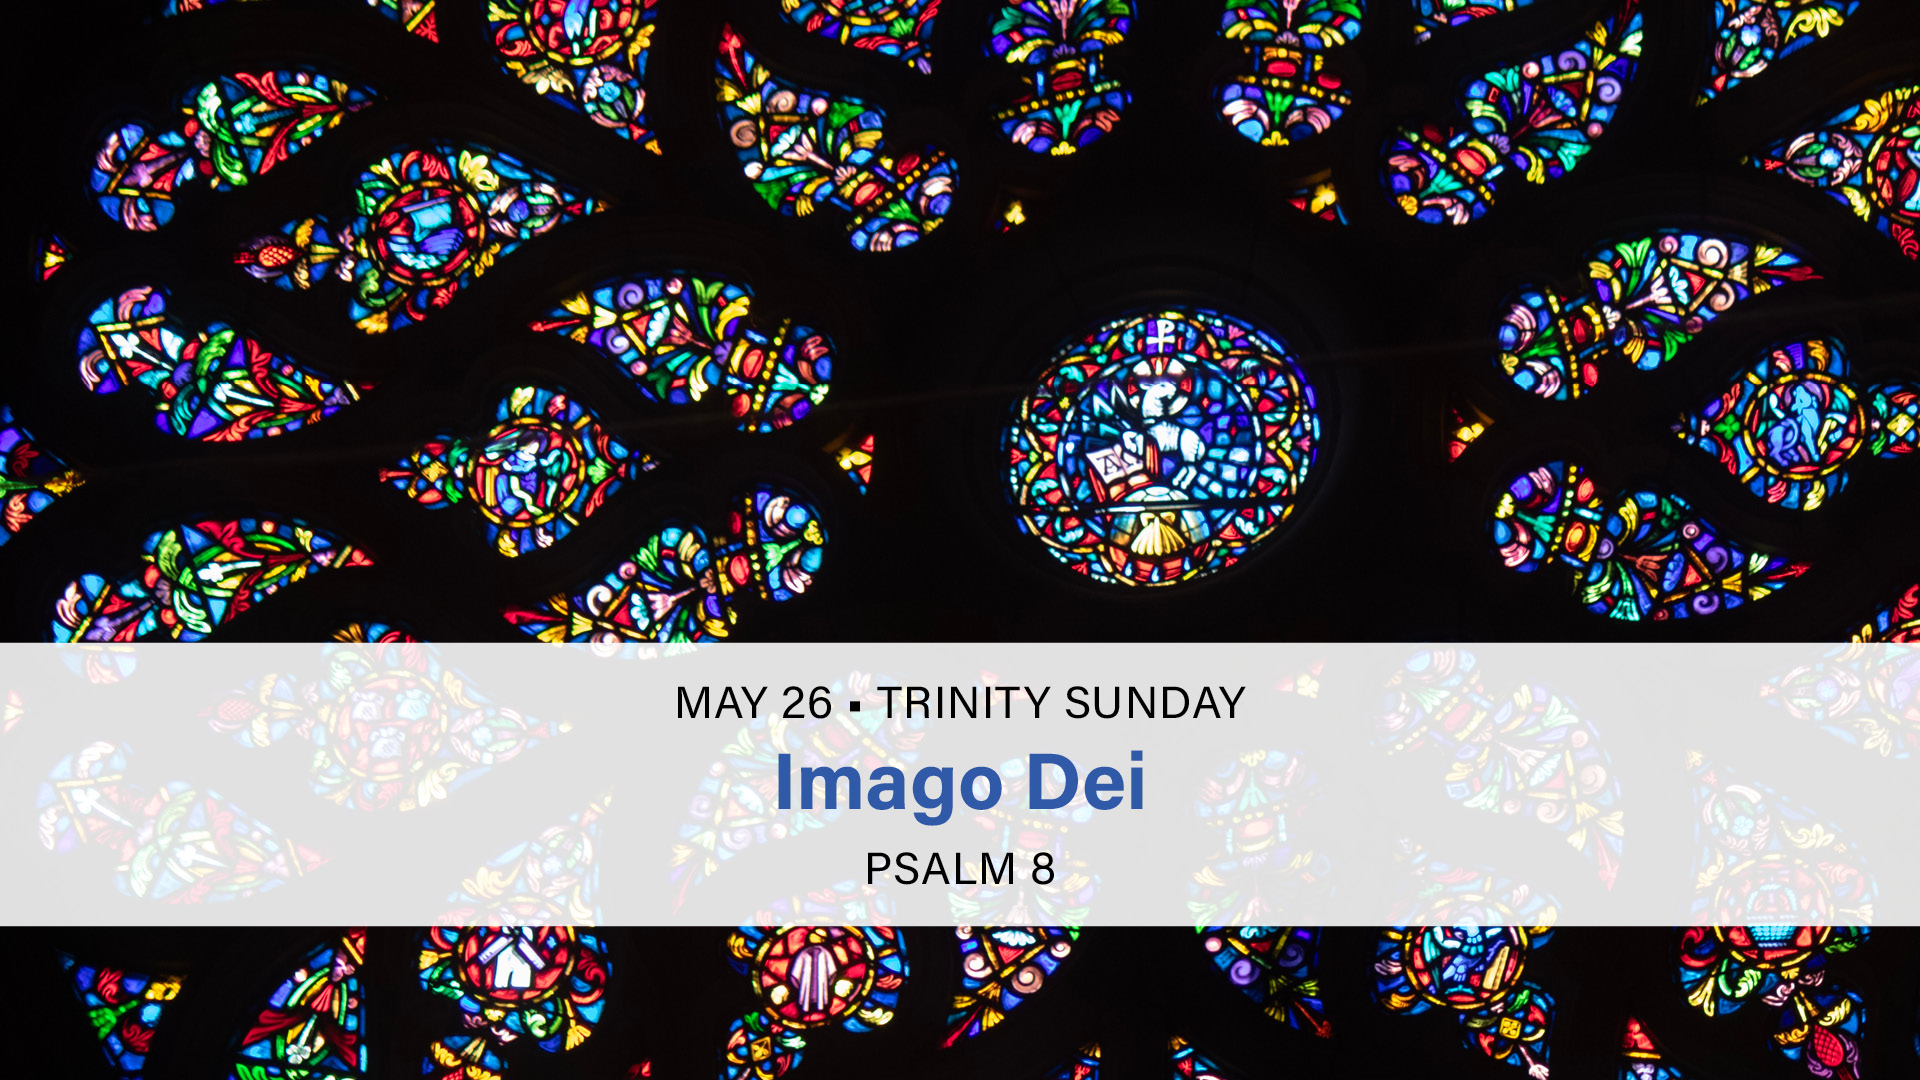 May 26 - Imago Dei